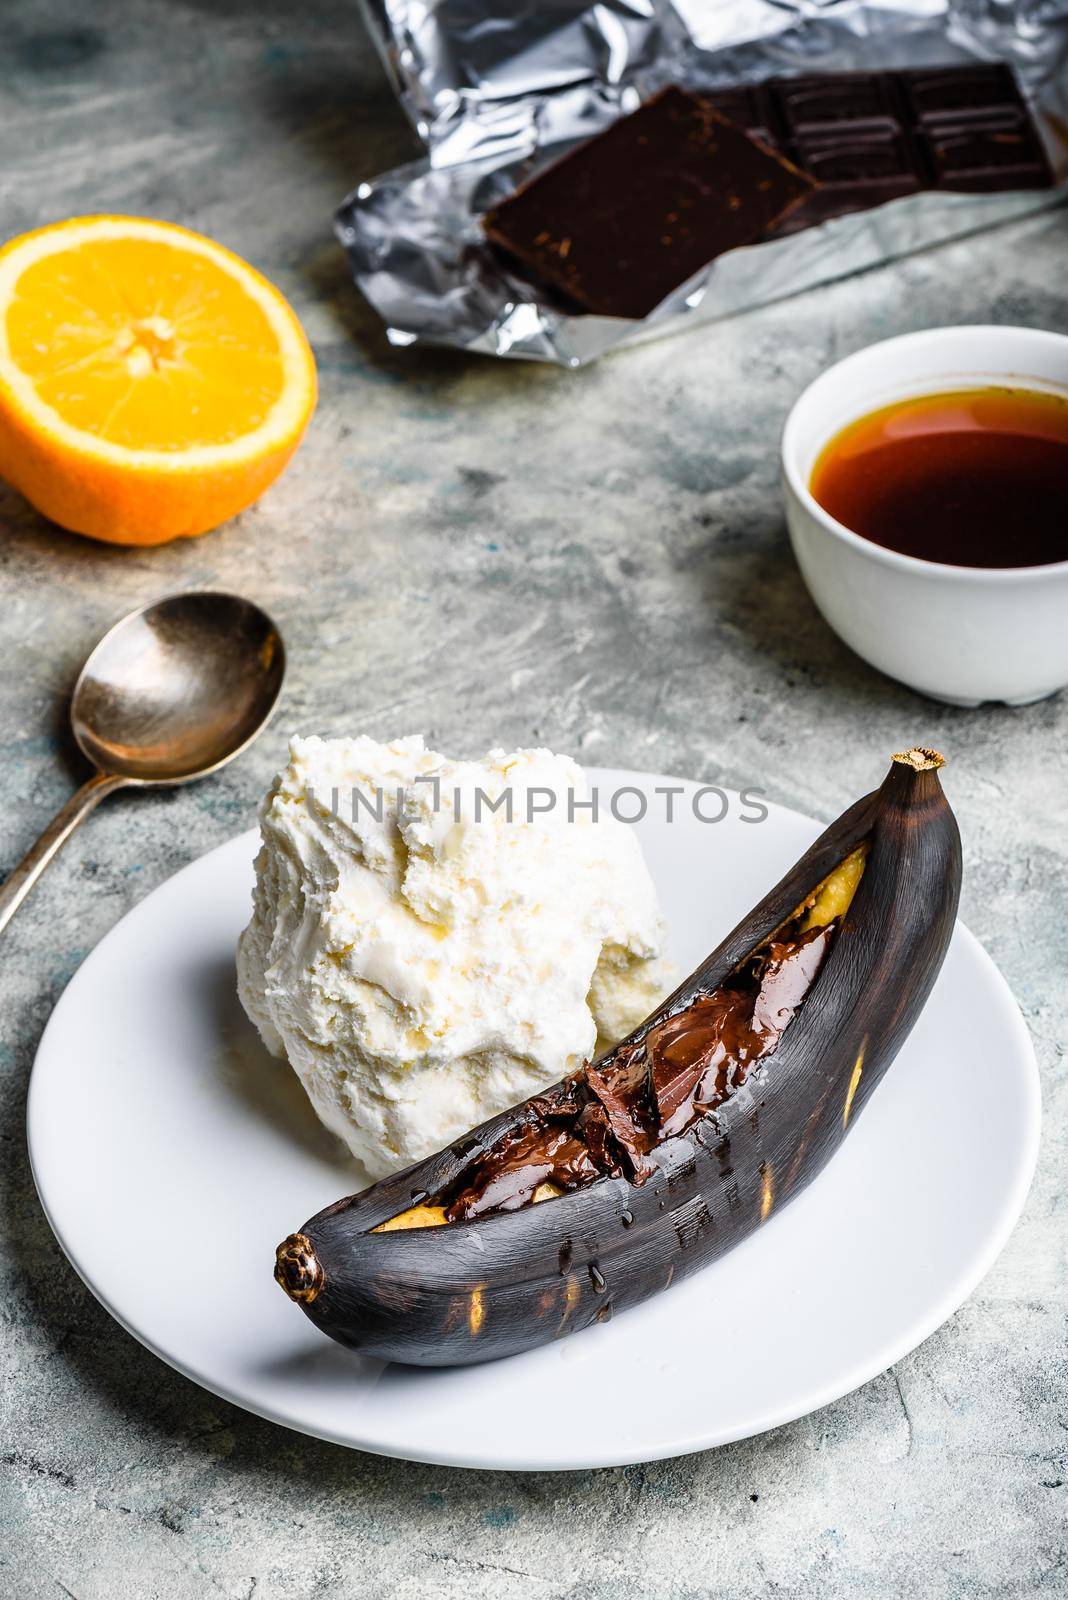 Grilled banana with dark chocolate and vanilla ice cream. by Seva_blsv